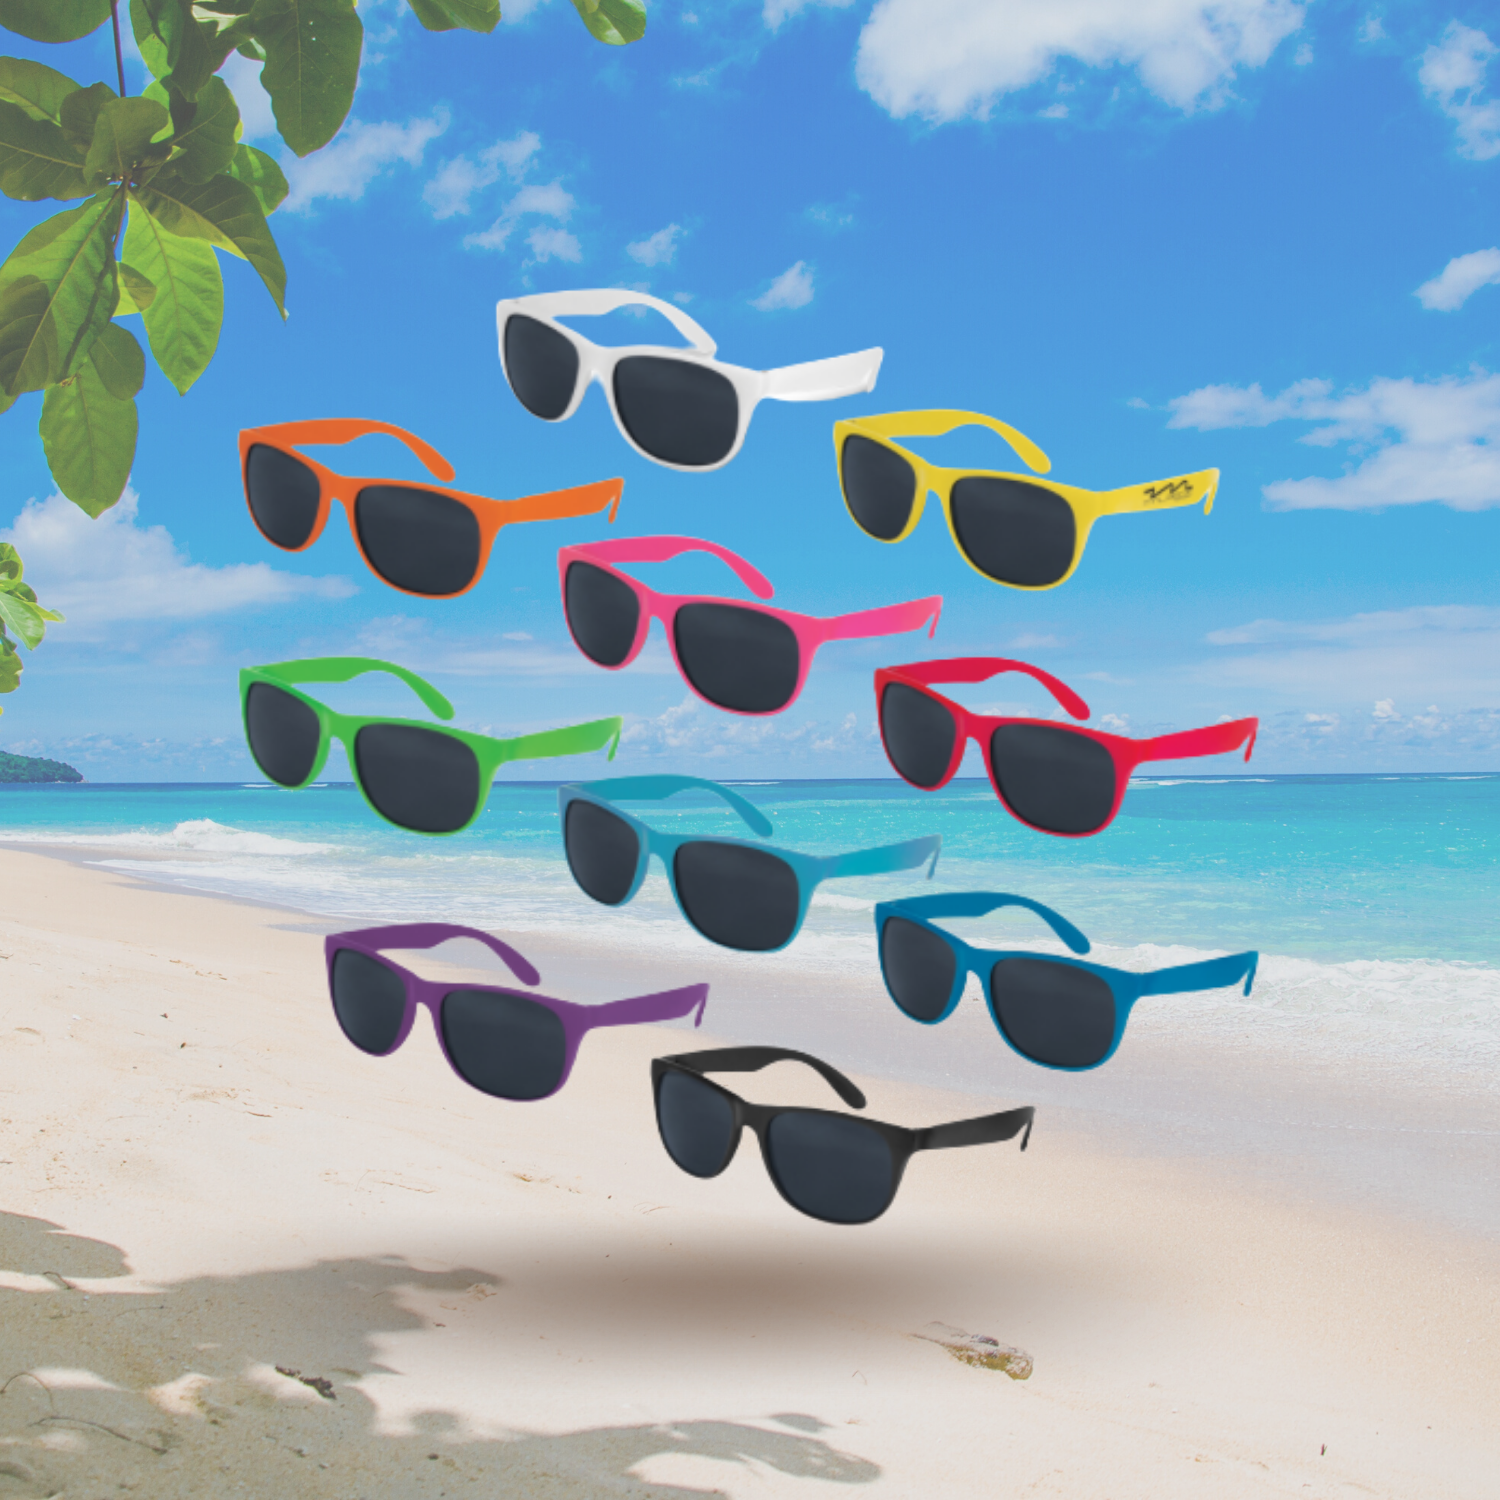 Coloured promotional sunglasses